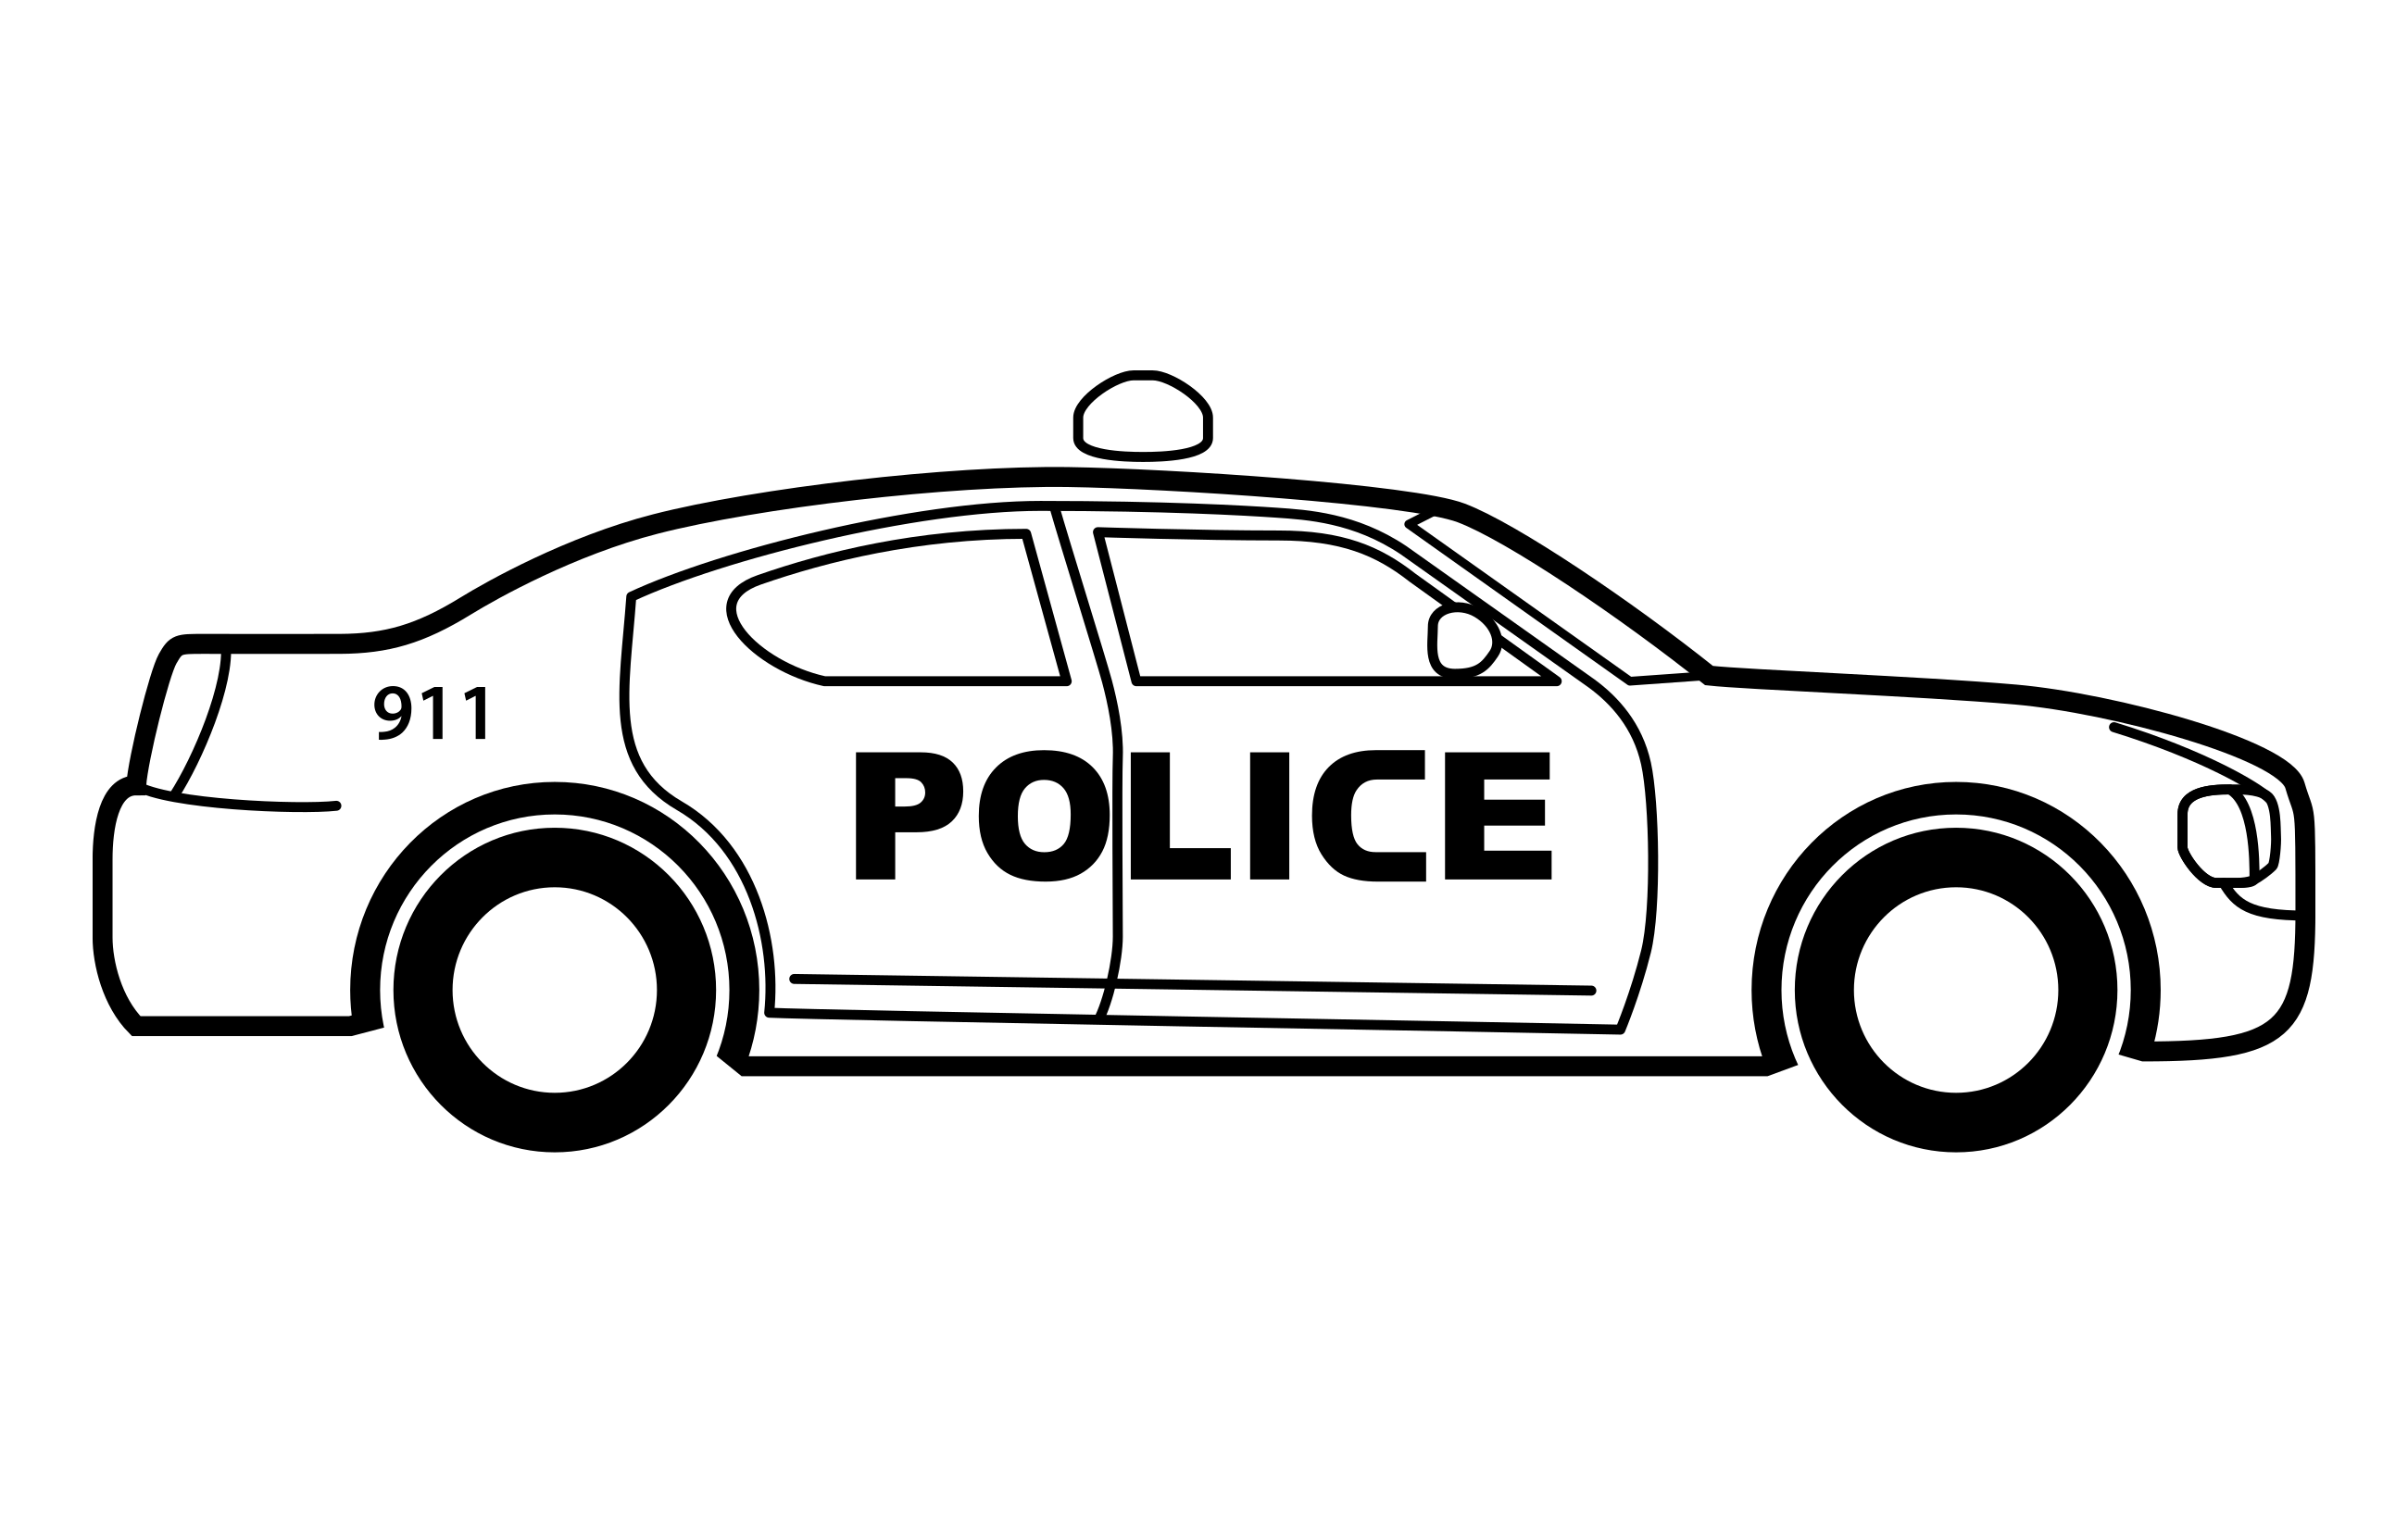 police clip art black and white